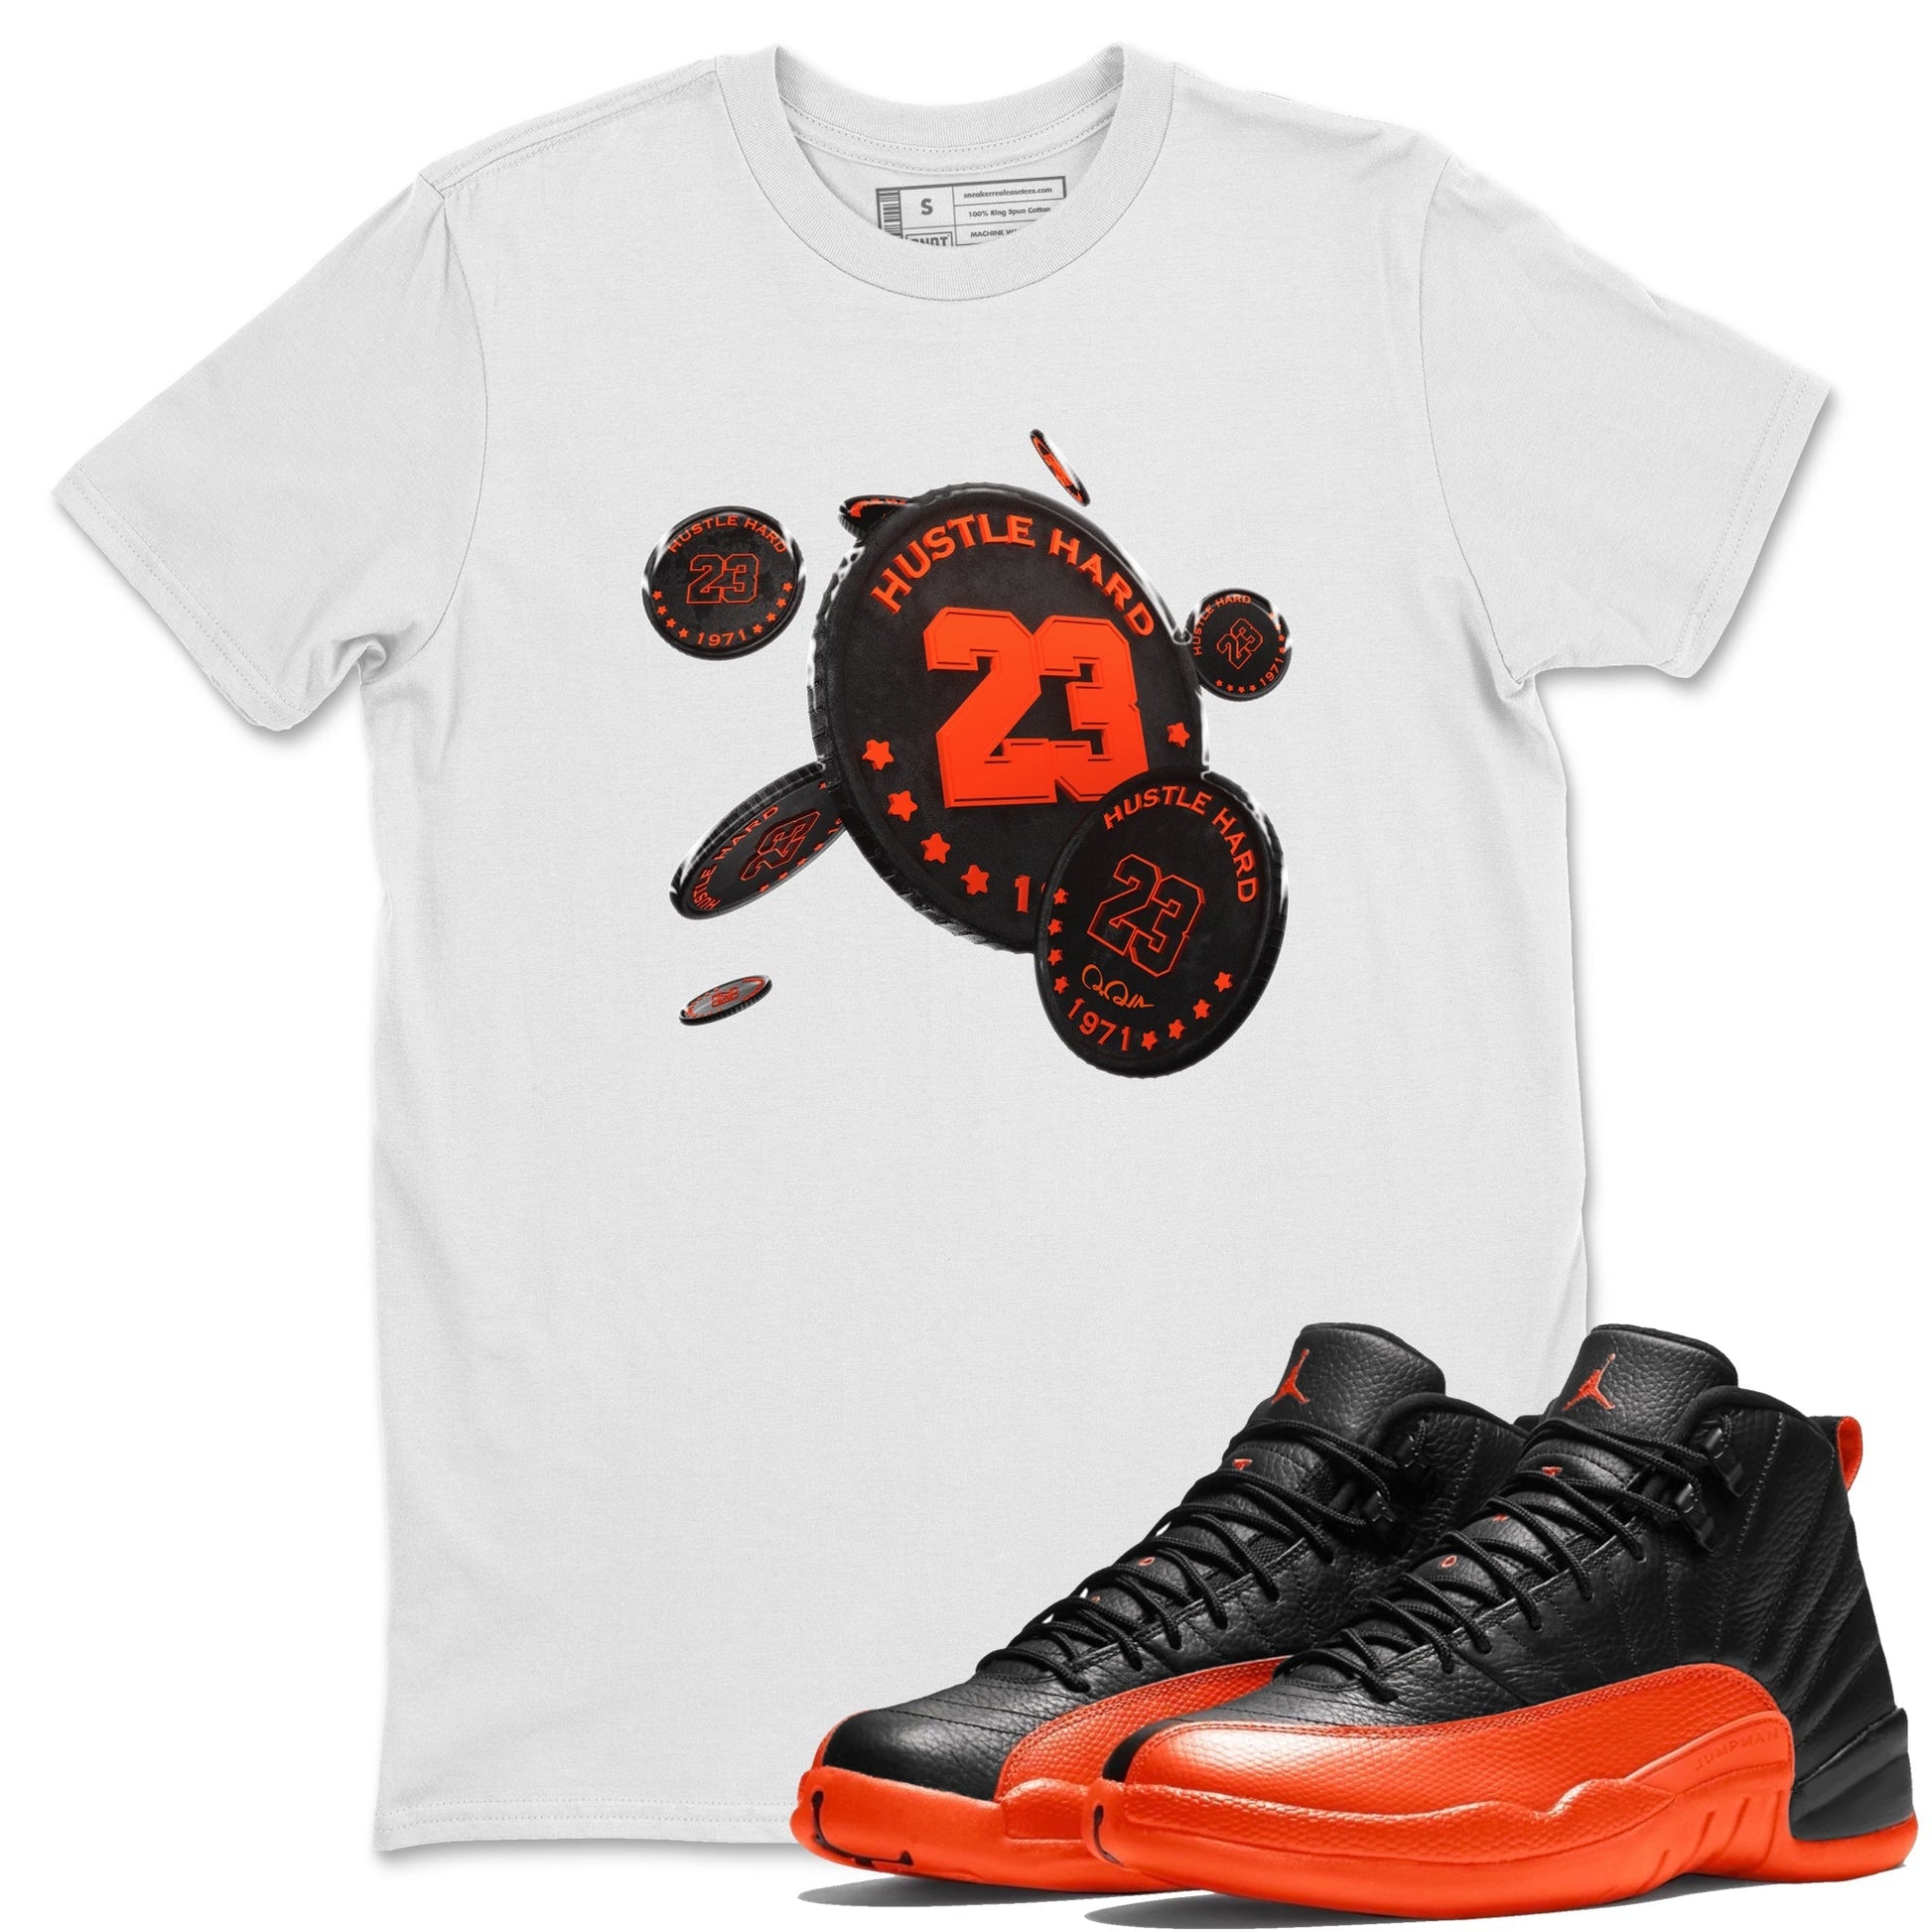 Air Jordan 12 Brilliant Orange Sneaker Match Tees Coin Drop Sneaker Tees AJ12 Brilliant Orange Sneaker Release Tees Unisex Shirts White 1